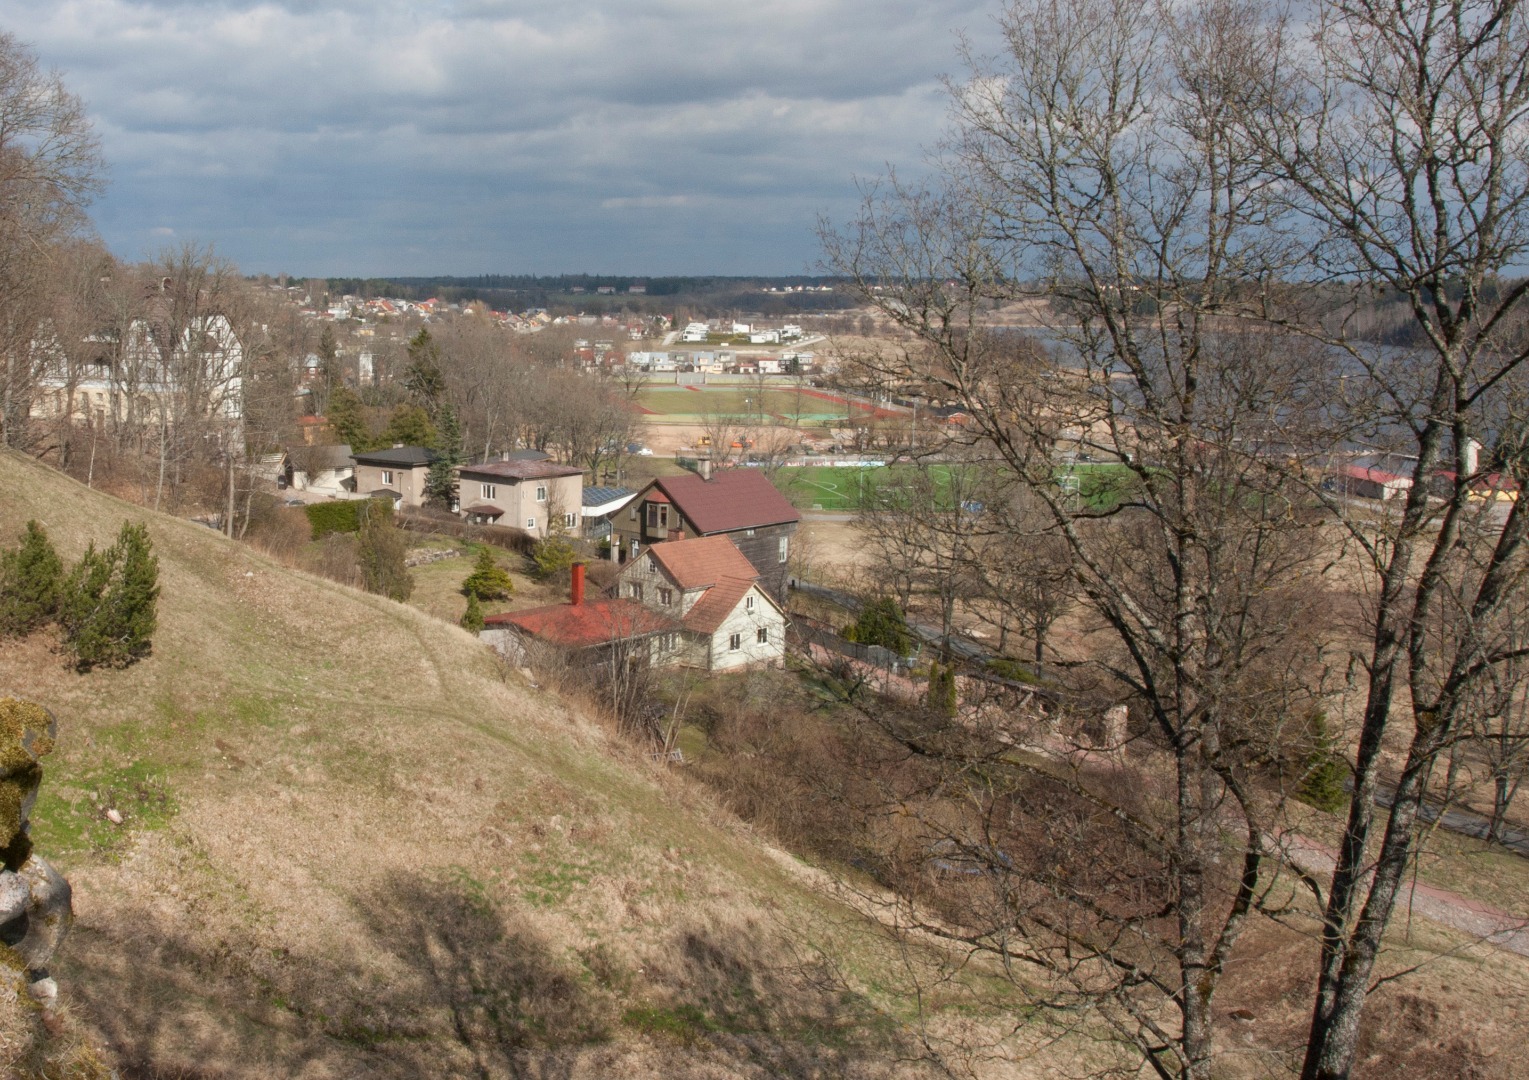 Viljandi view from Kirsimägi rephoto